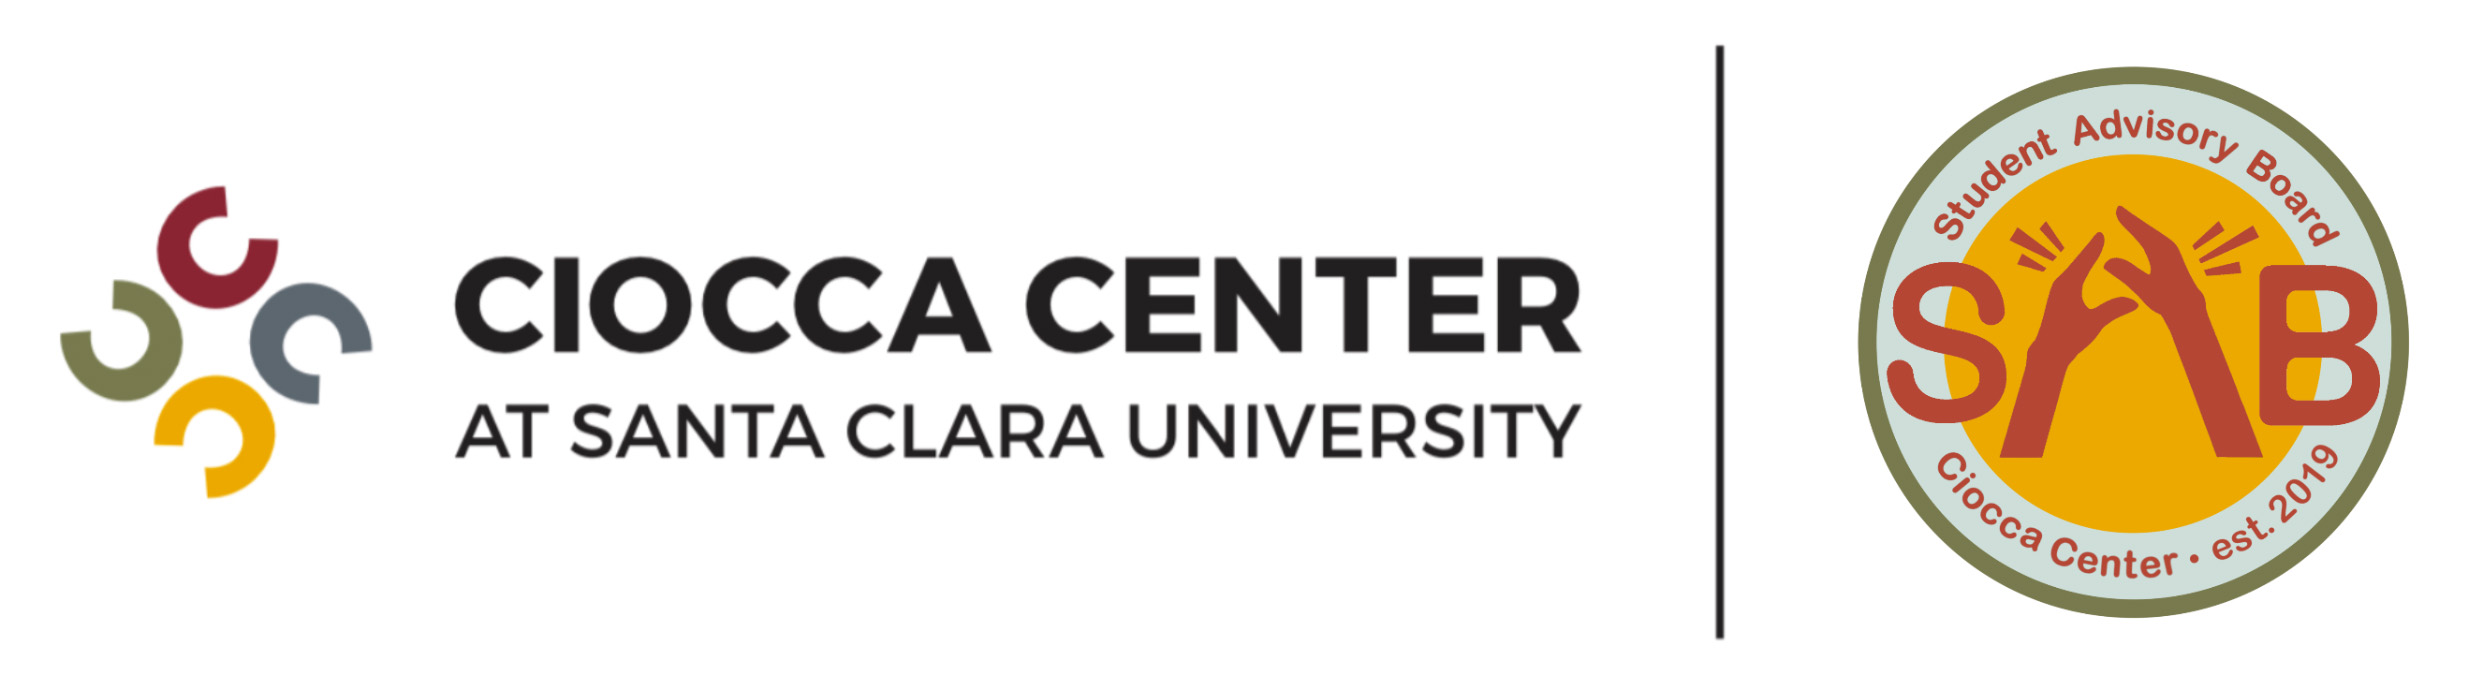 Ciocca Center Badge SAB